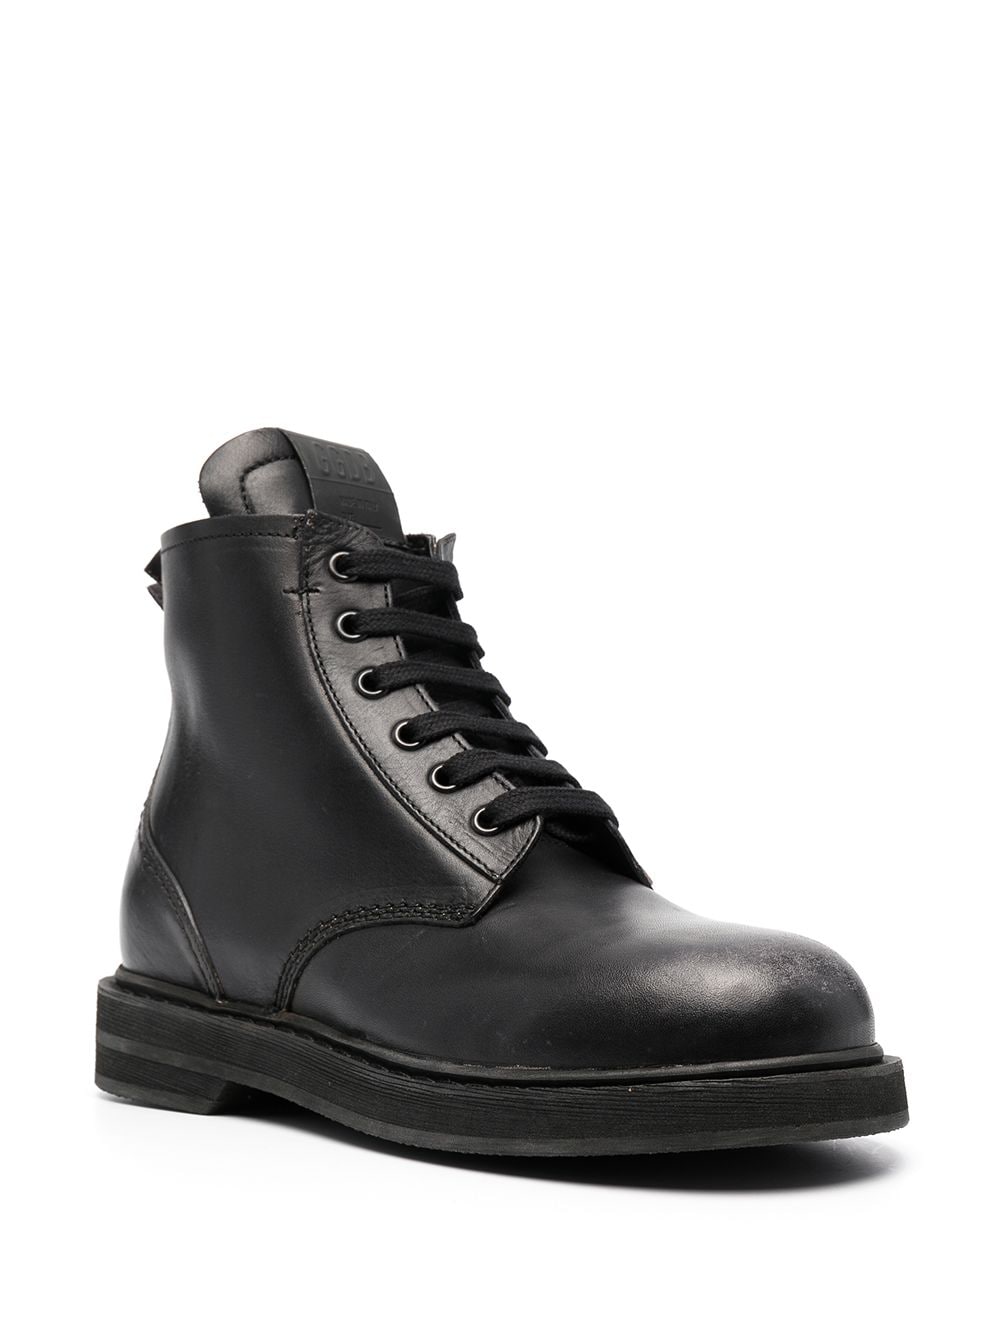 Golden Goose Black Leather Boots ModeSens